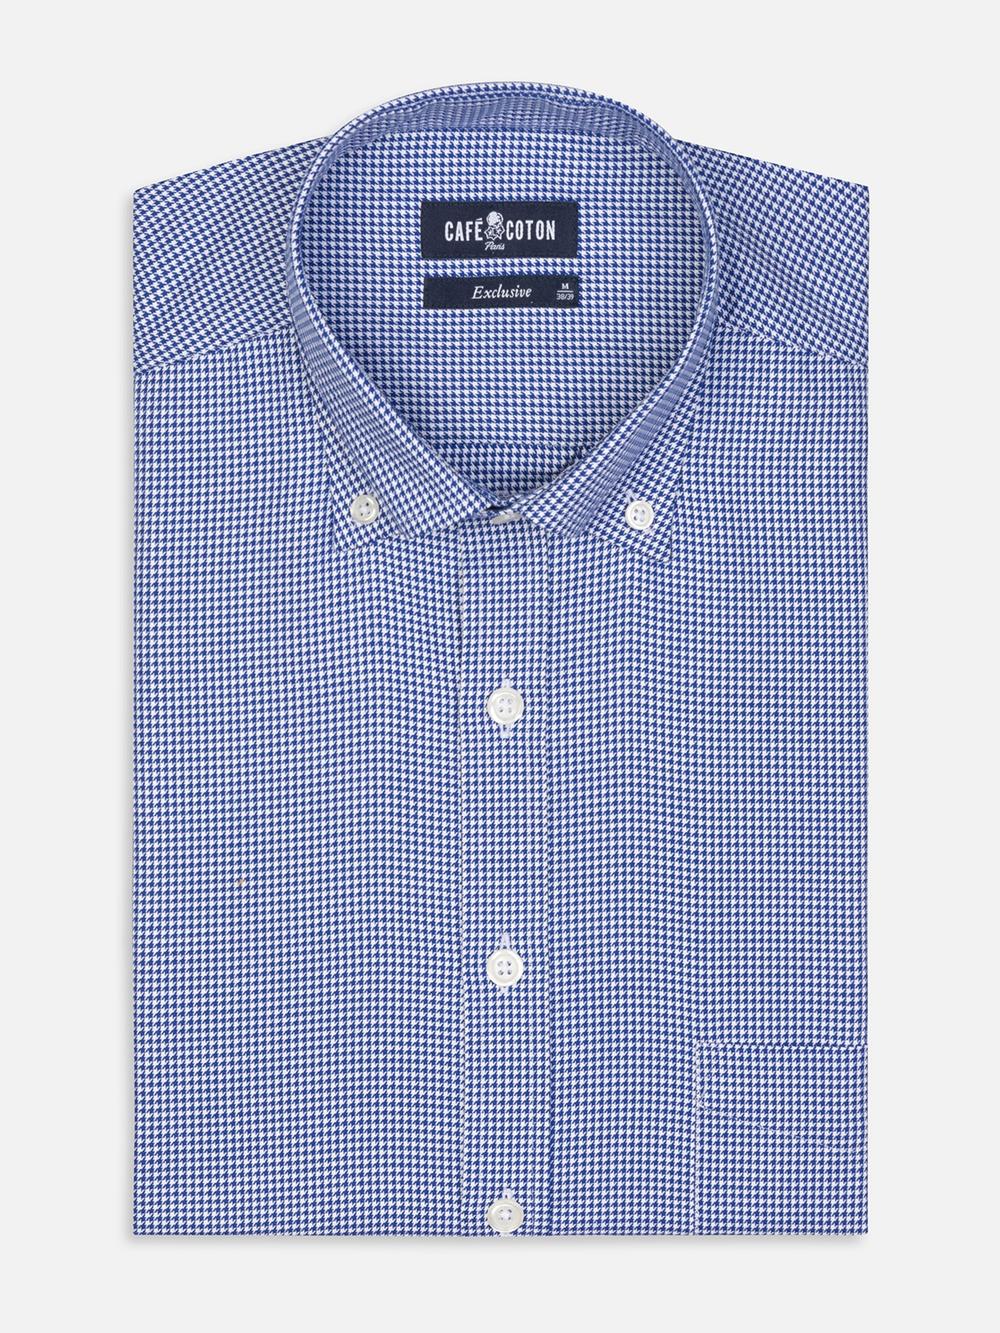 Landry Navy Gingham Shirt - Button down collar